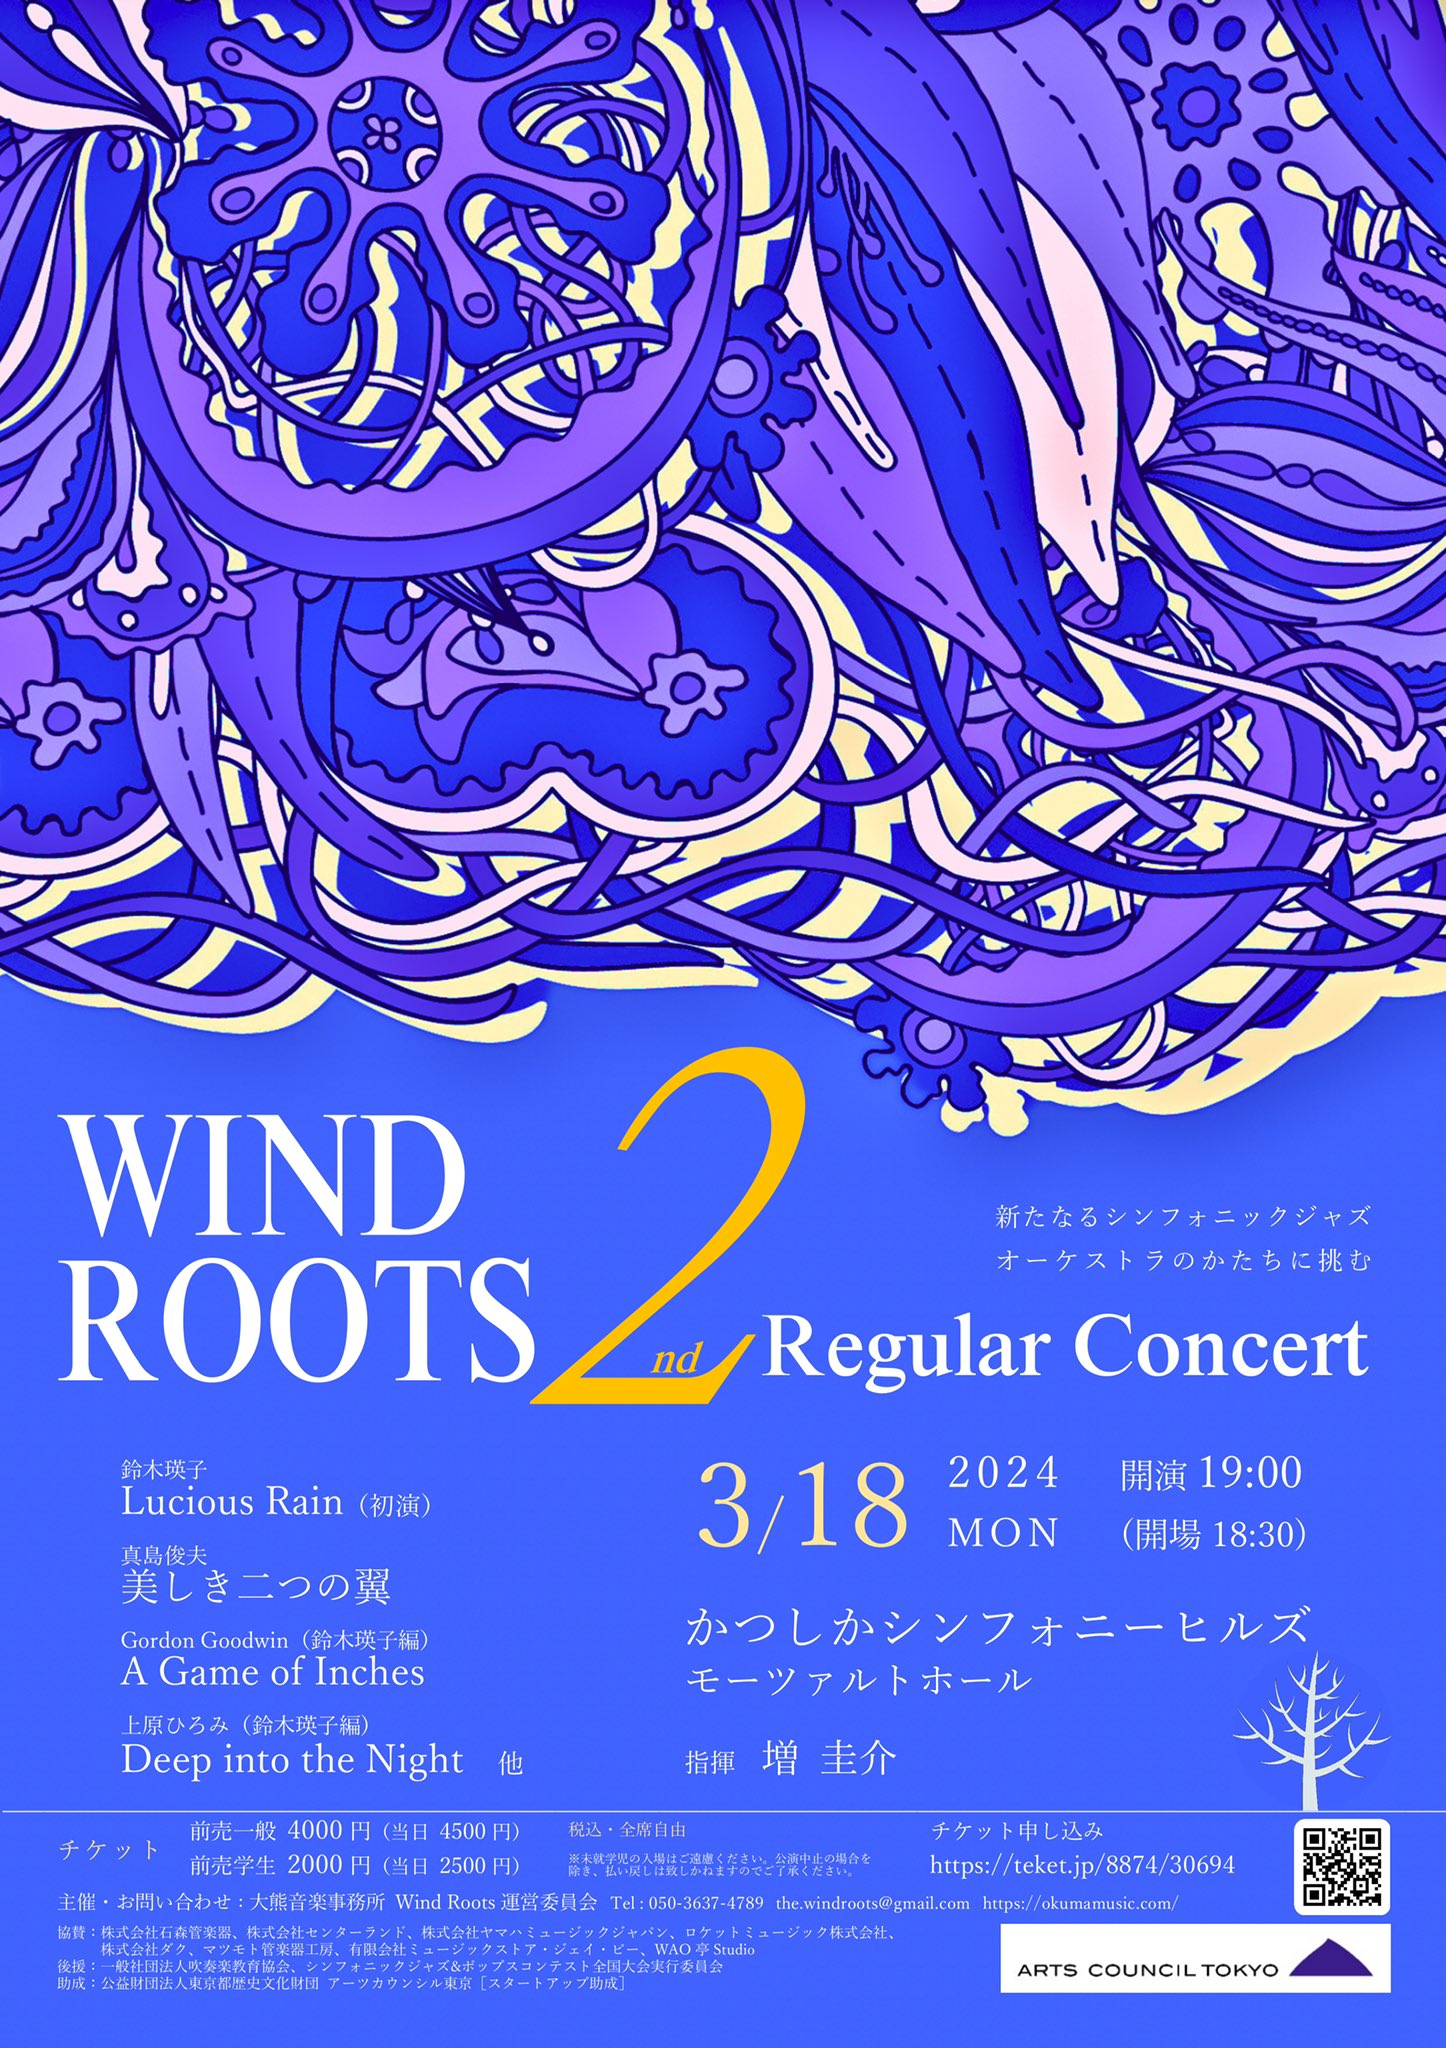 Wind Roots 2nd Regular Concert